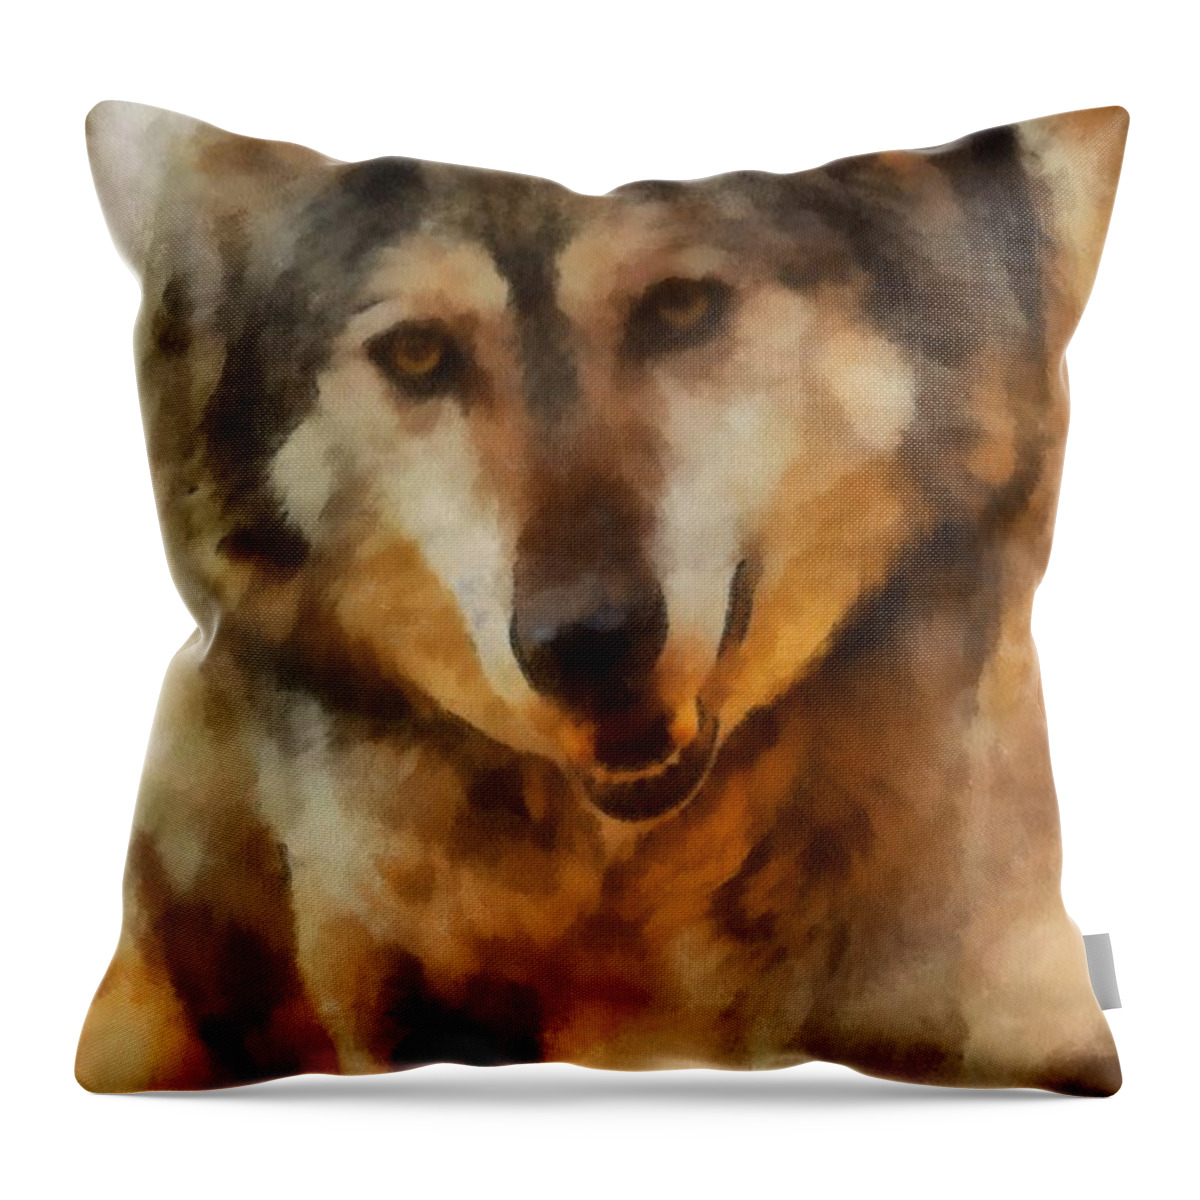 Wolf Throw Pillow featuring the digital art Fire Wolf by Ernest Echols